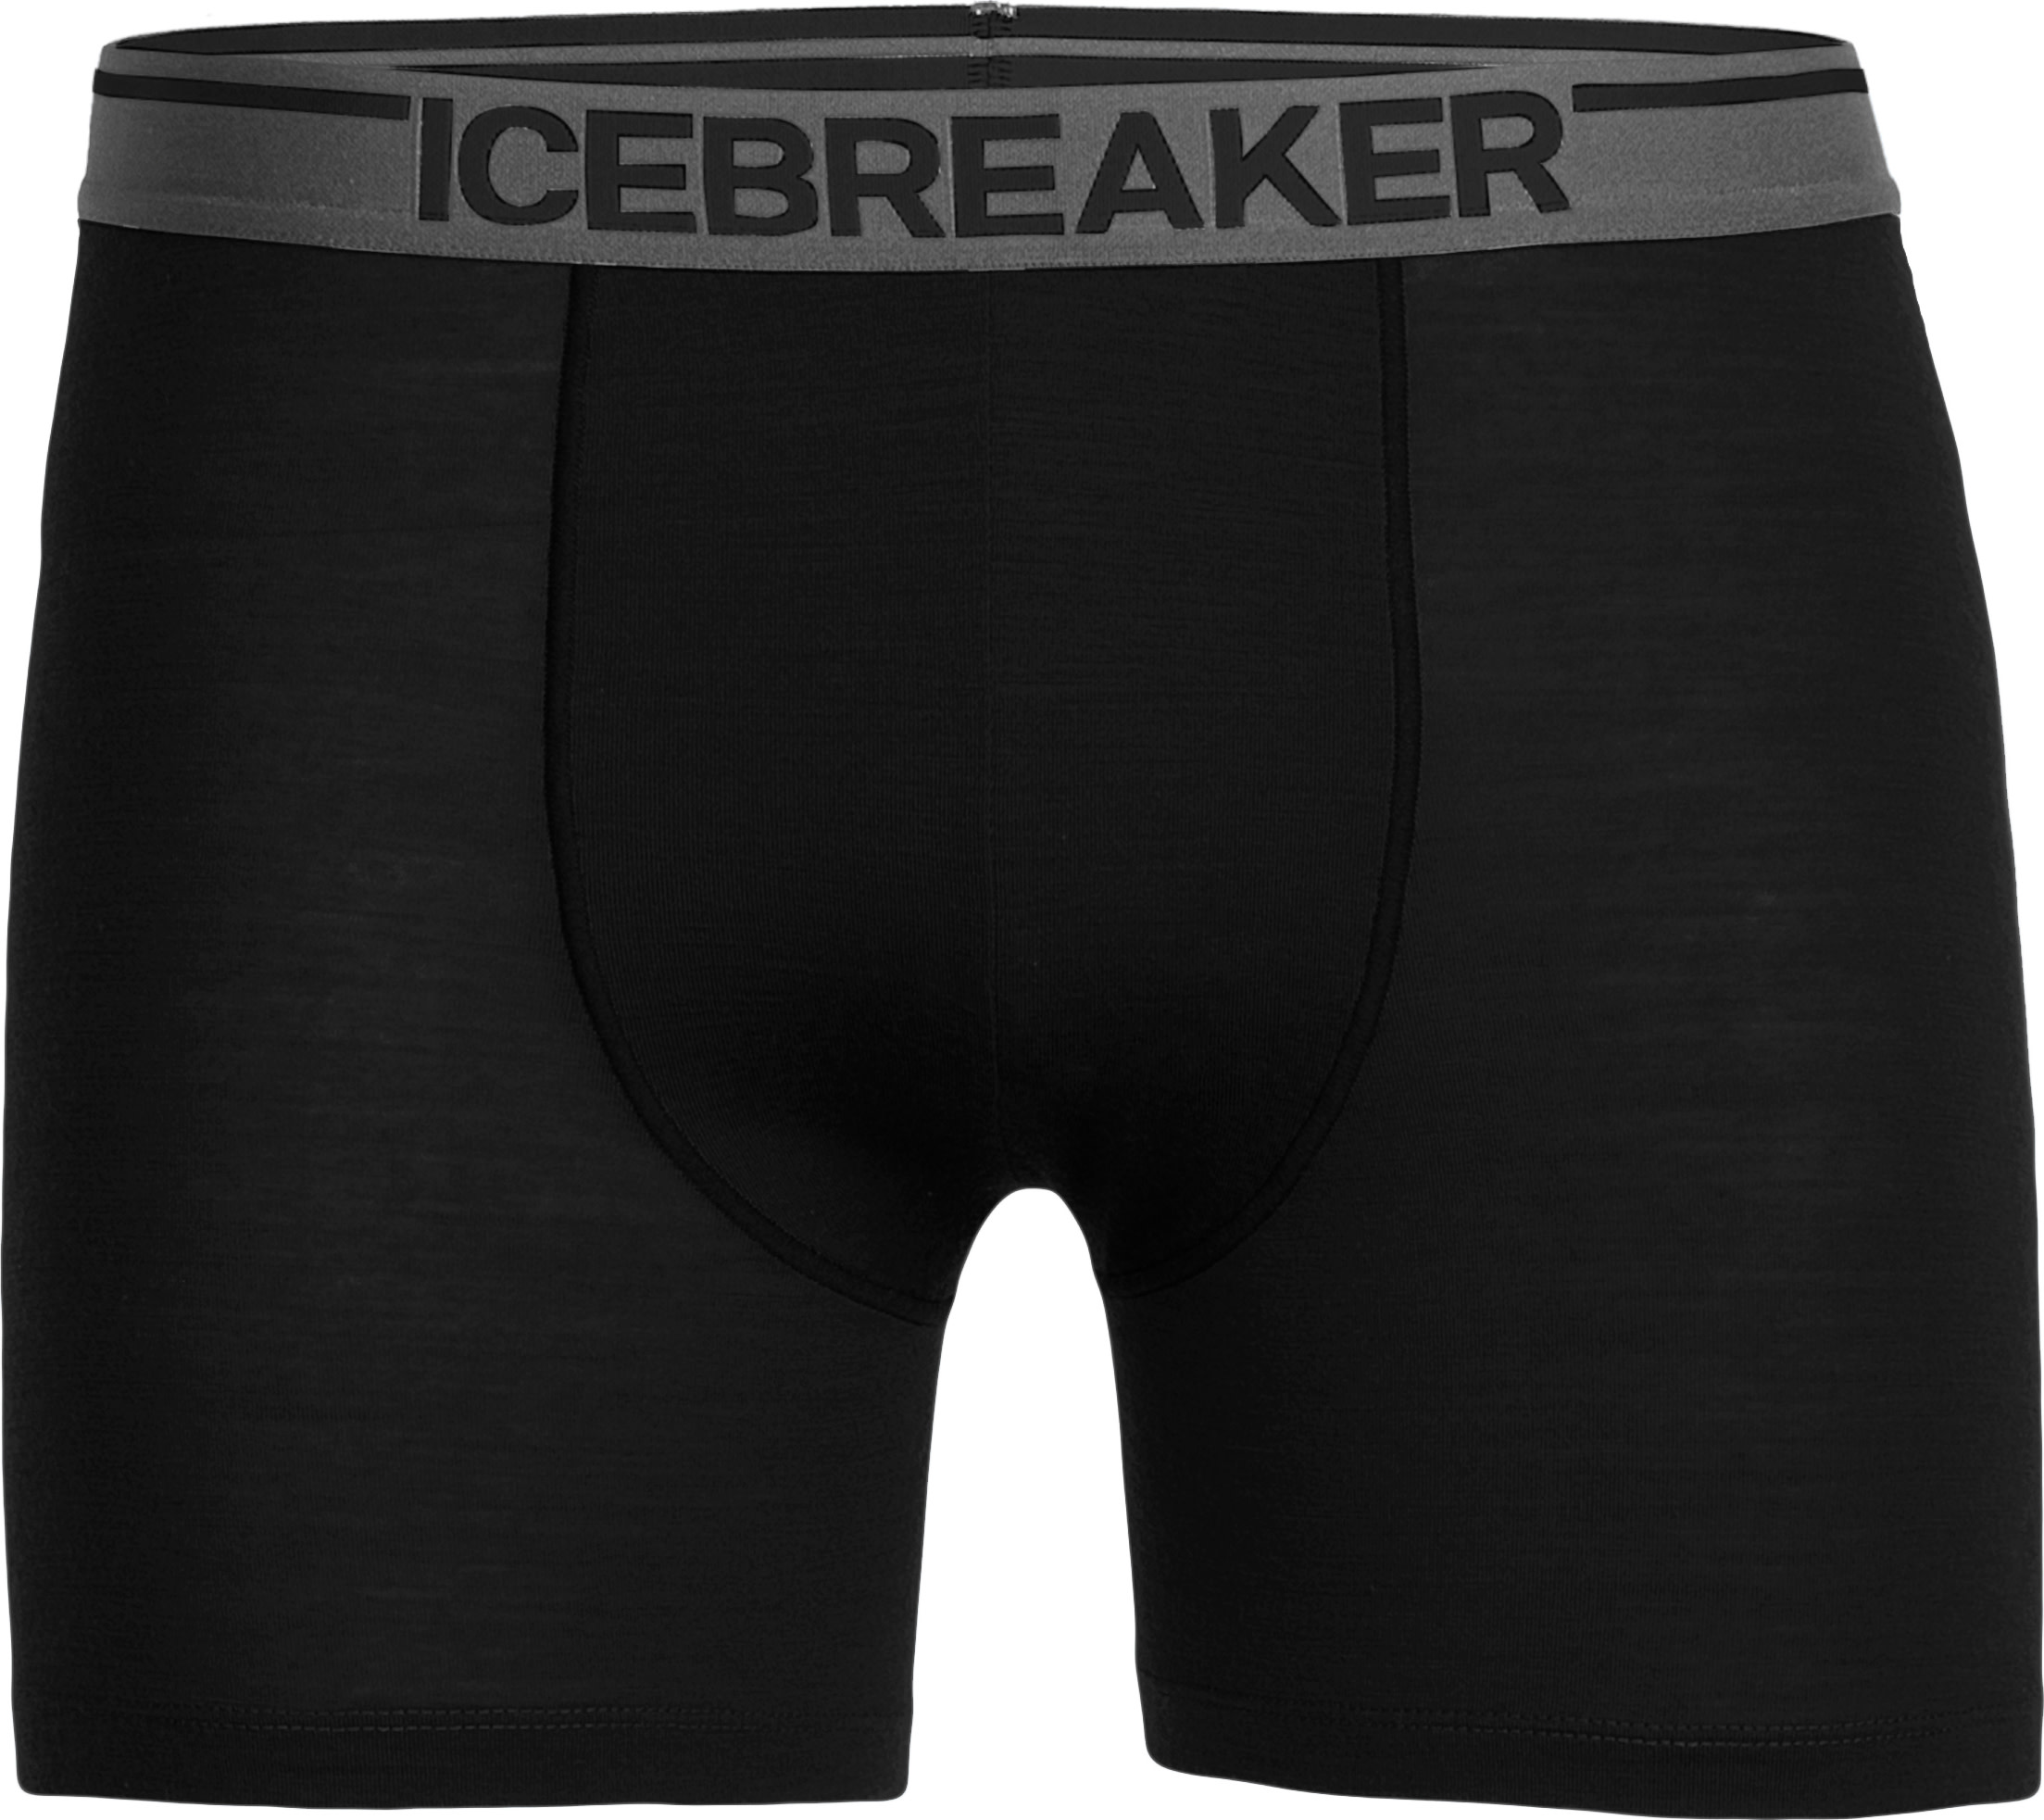 Icebreaker Men’s Anatomica Boxers Black